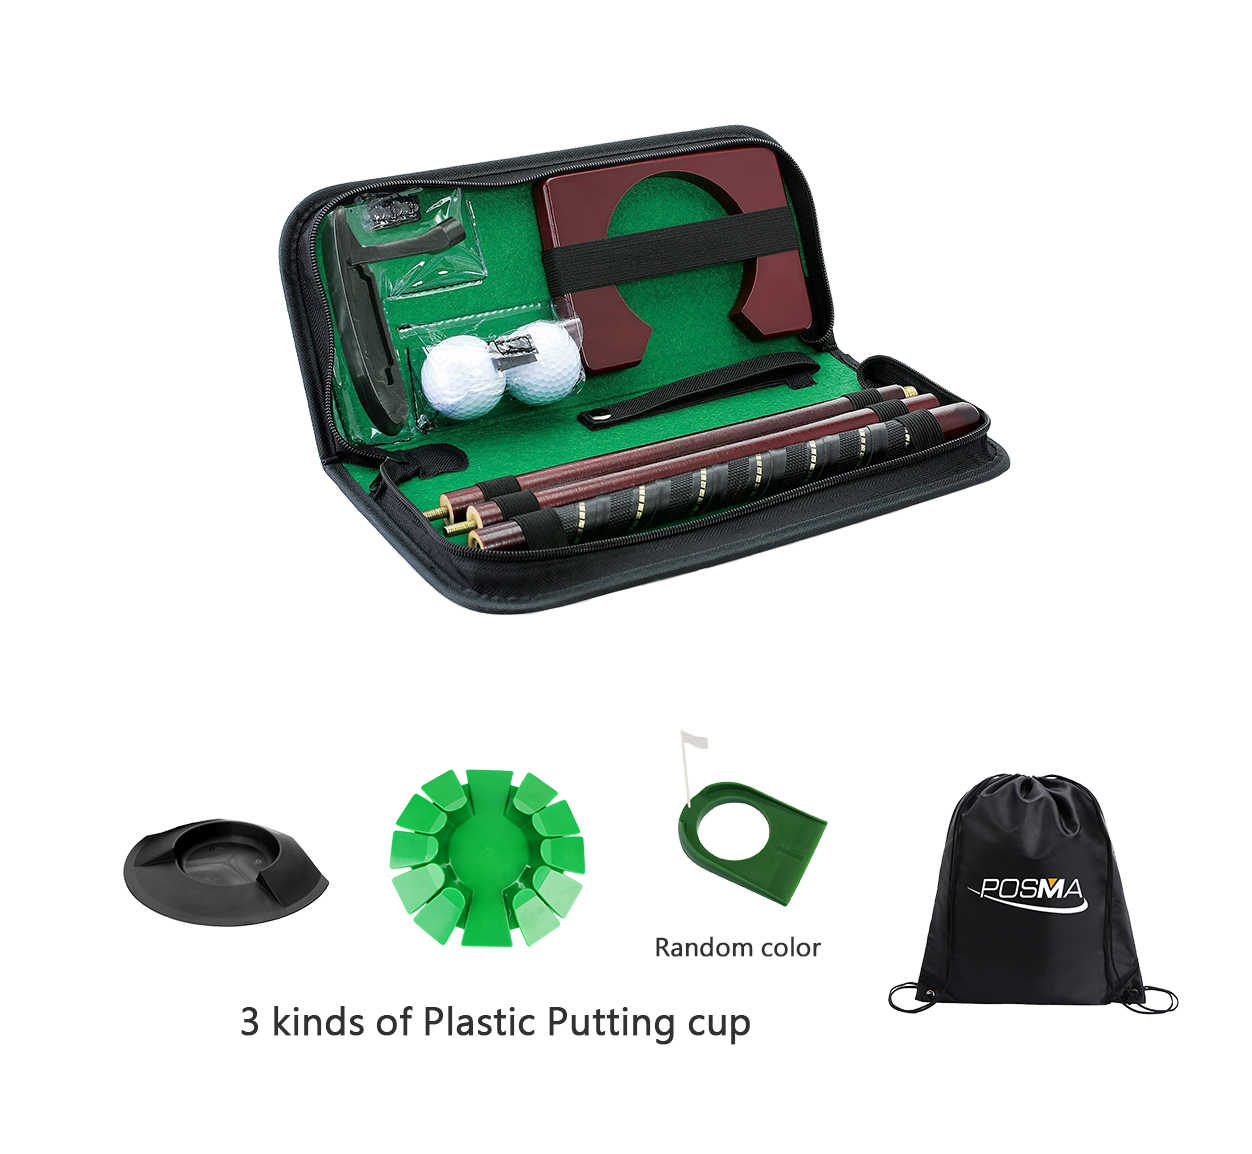 Posma PG020M 高爾夫推桿練習組-木質推桿+3款塑料推桿果嶺盤+Posma黑色束口後背包